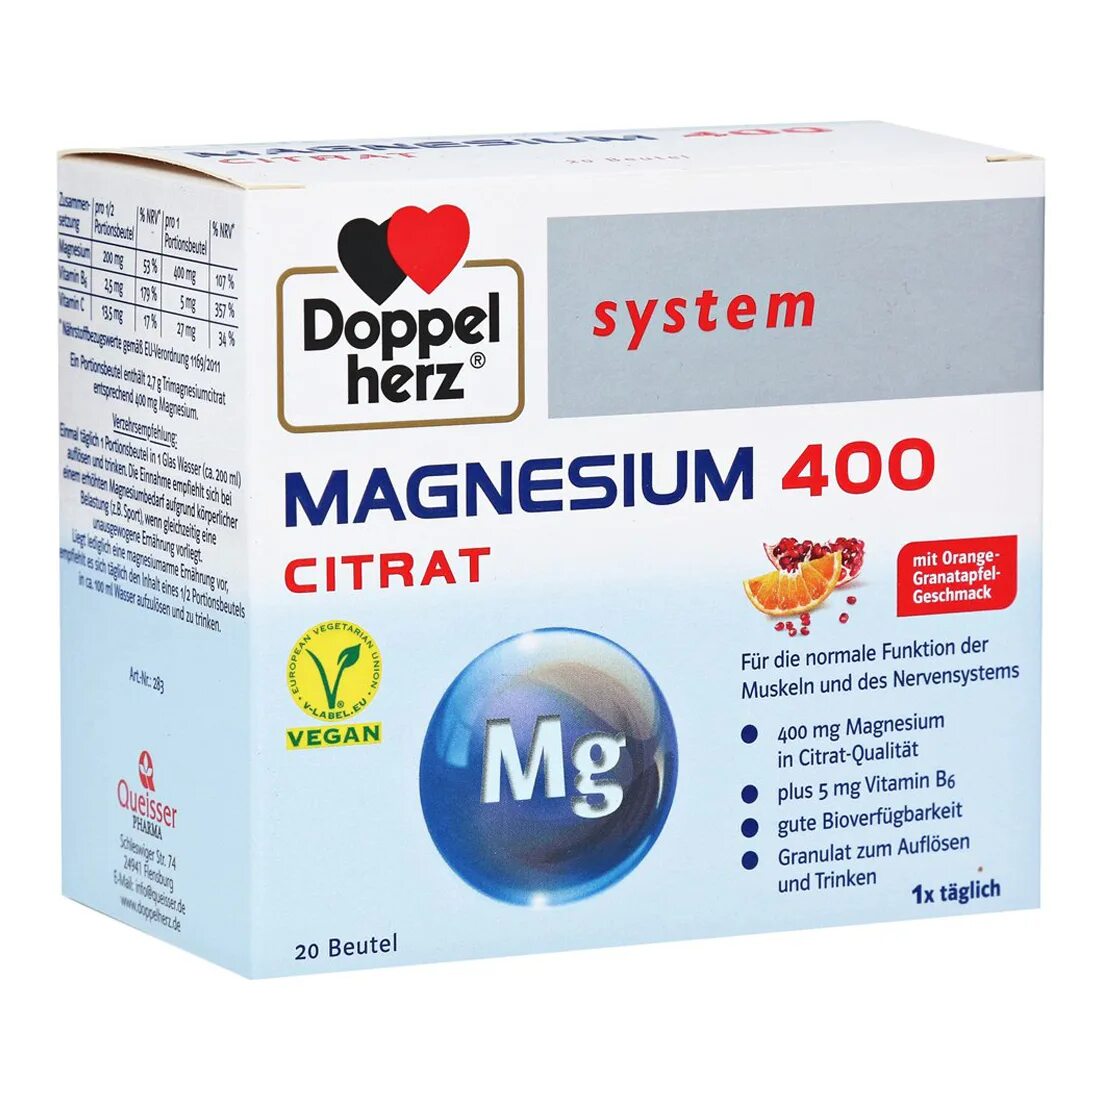 Магний витамины б допель герц. Магний 400 Doppel Herz 40 саше. Doppel Herz цитрат. Магнезиум от доппел Герц. Магнезиум 400 немецкий.